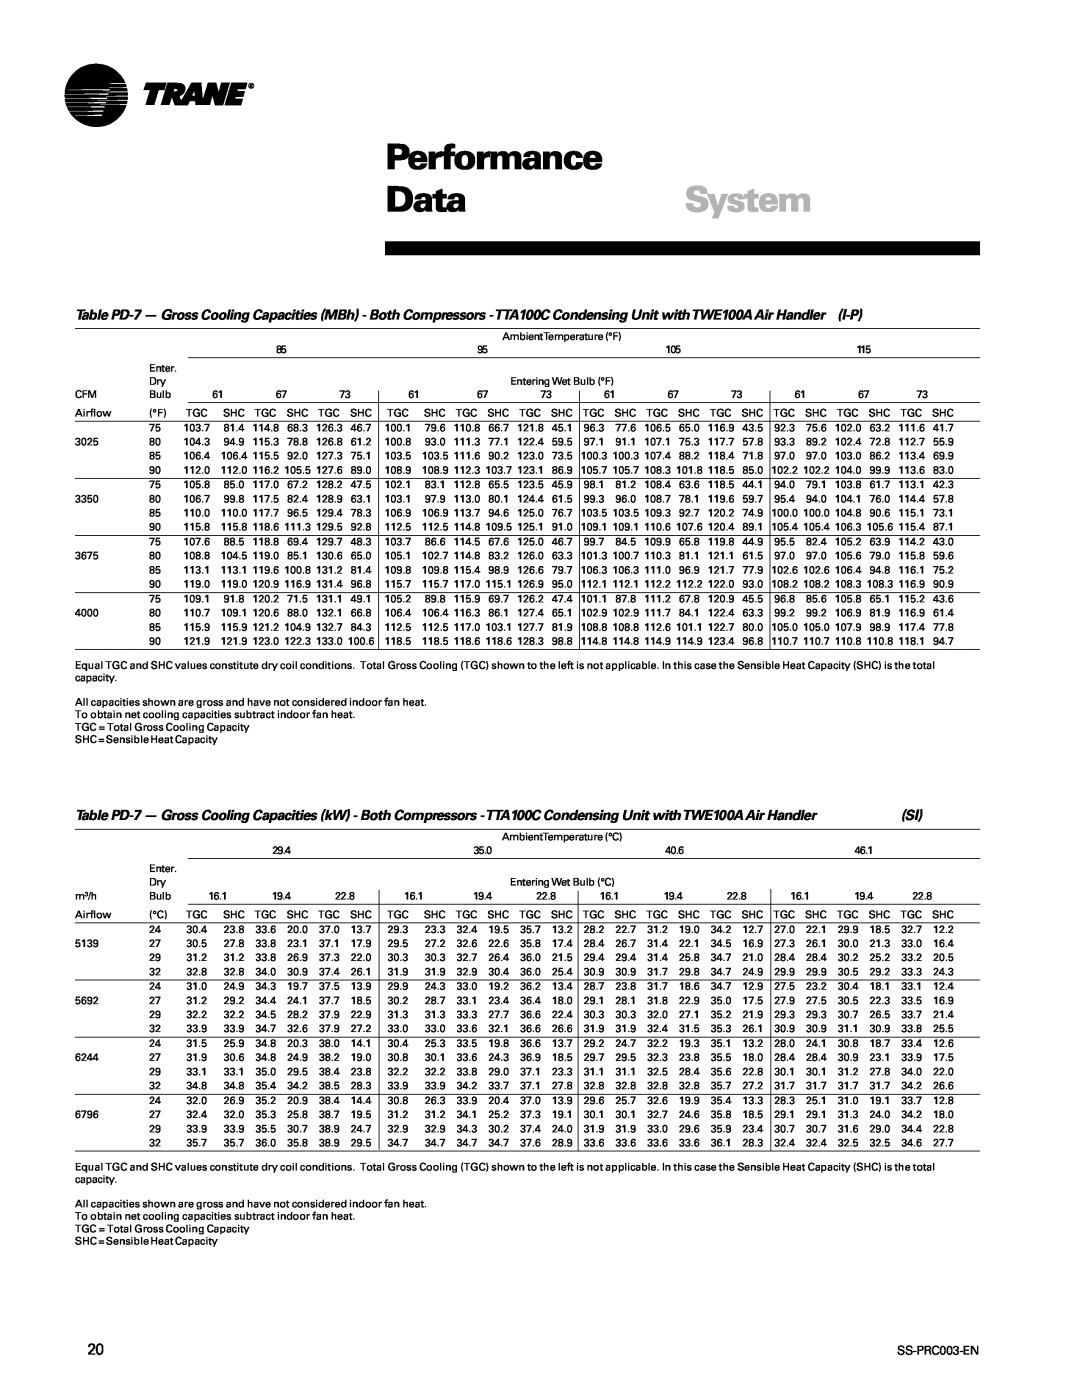 Trane SS-PRC003-EN manual Performance, DataSystem, AmbientTemperature F 